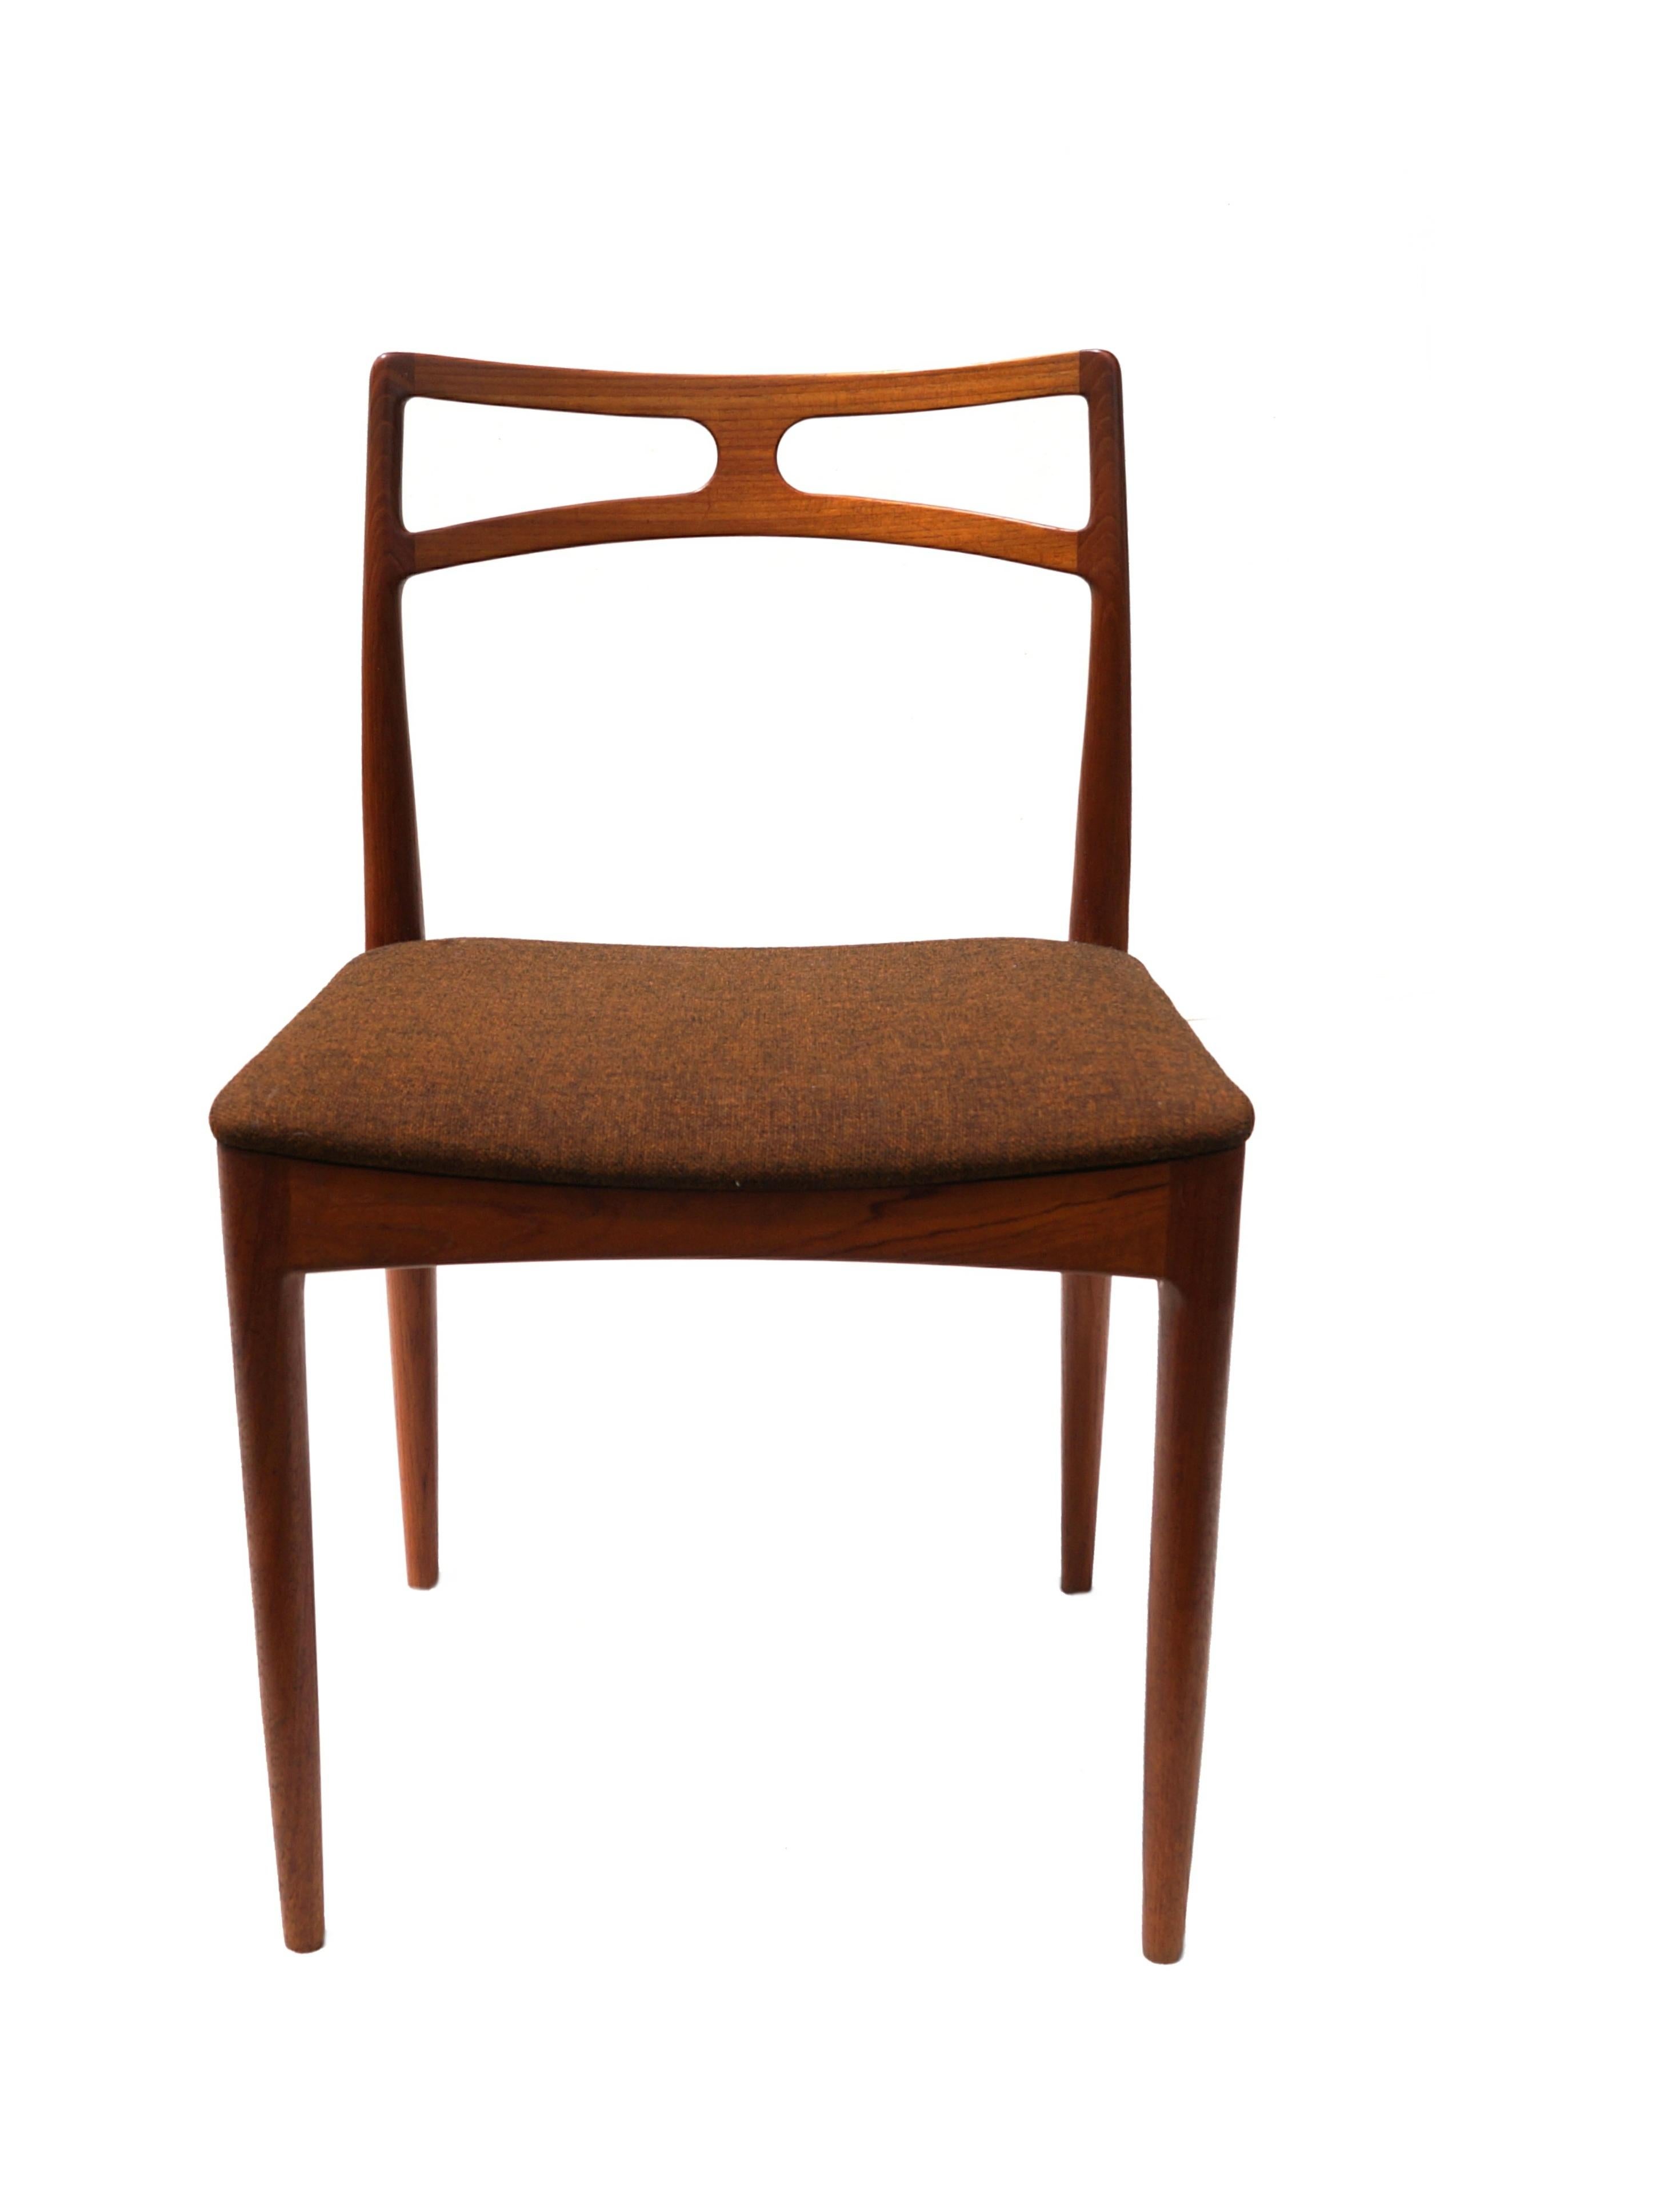 Mid-20th Century Set of 6 Johannes Andersen Teak Danish Modern Dining Room Chairs Denmark, 1960's For Sale